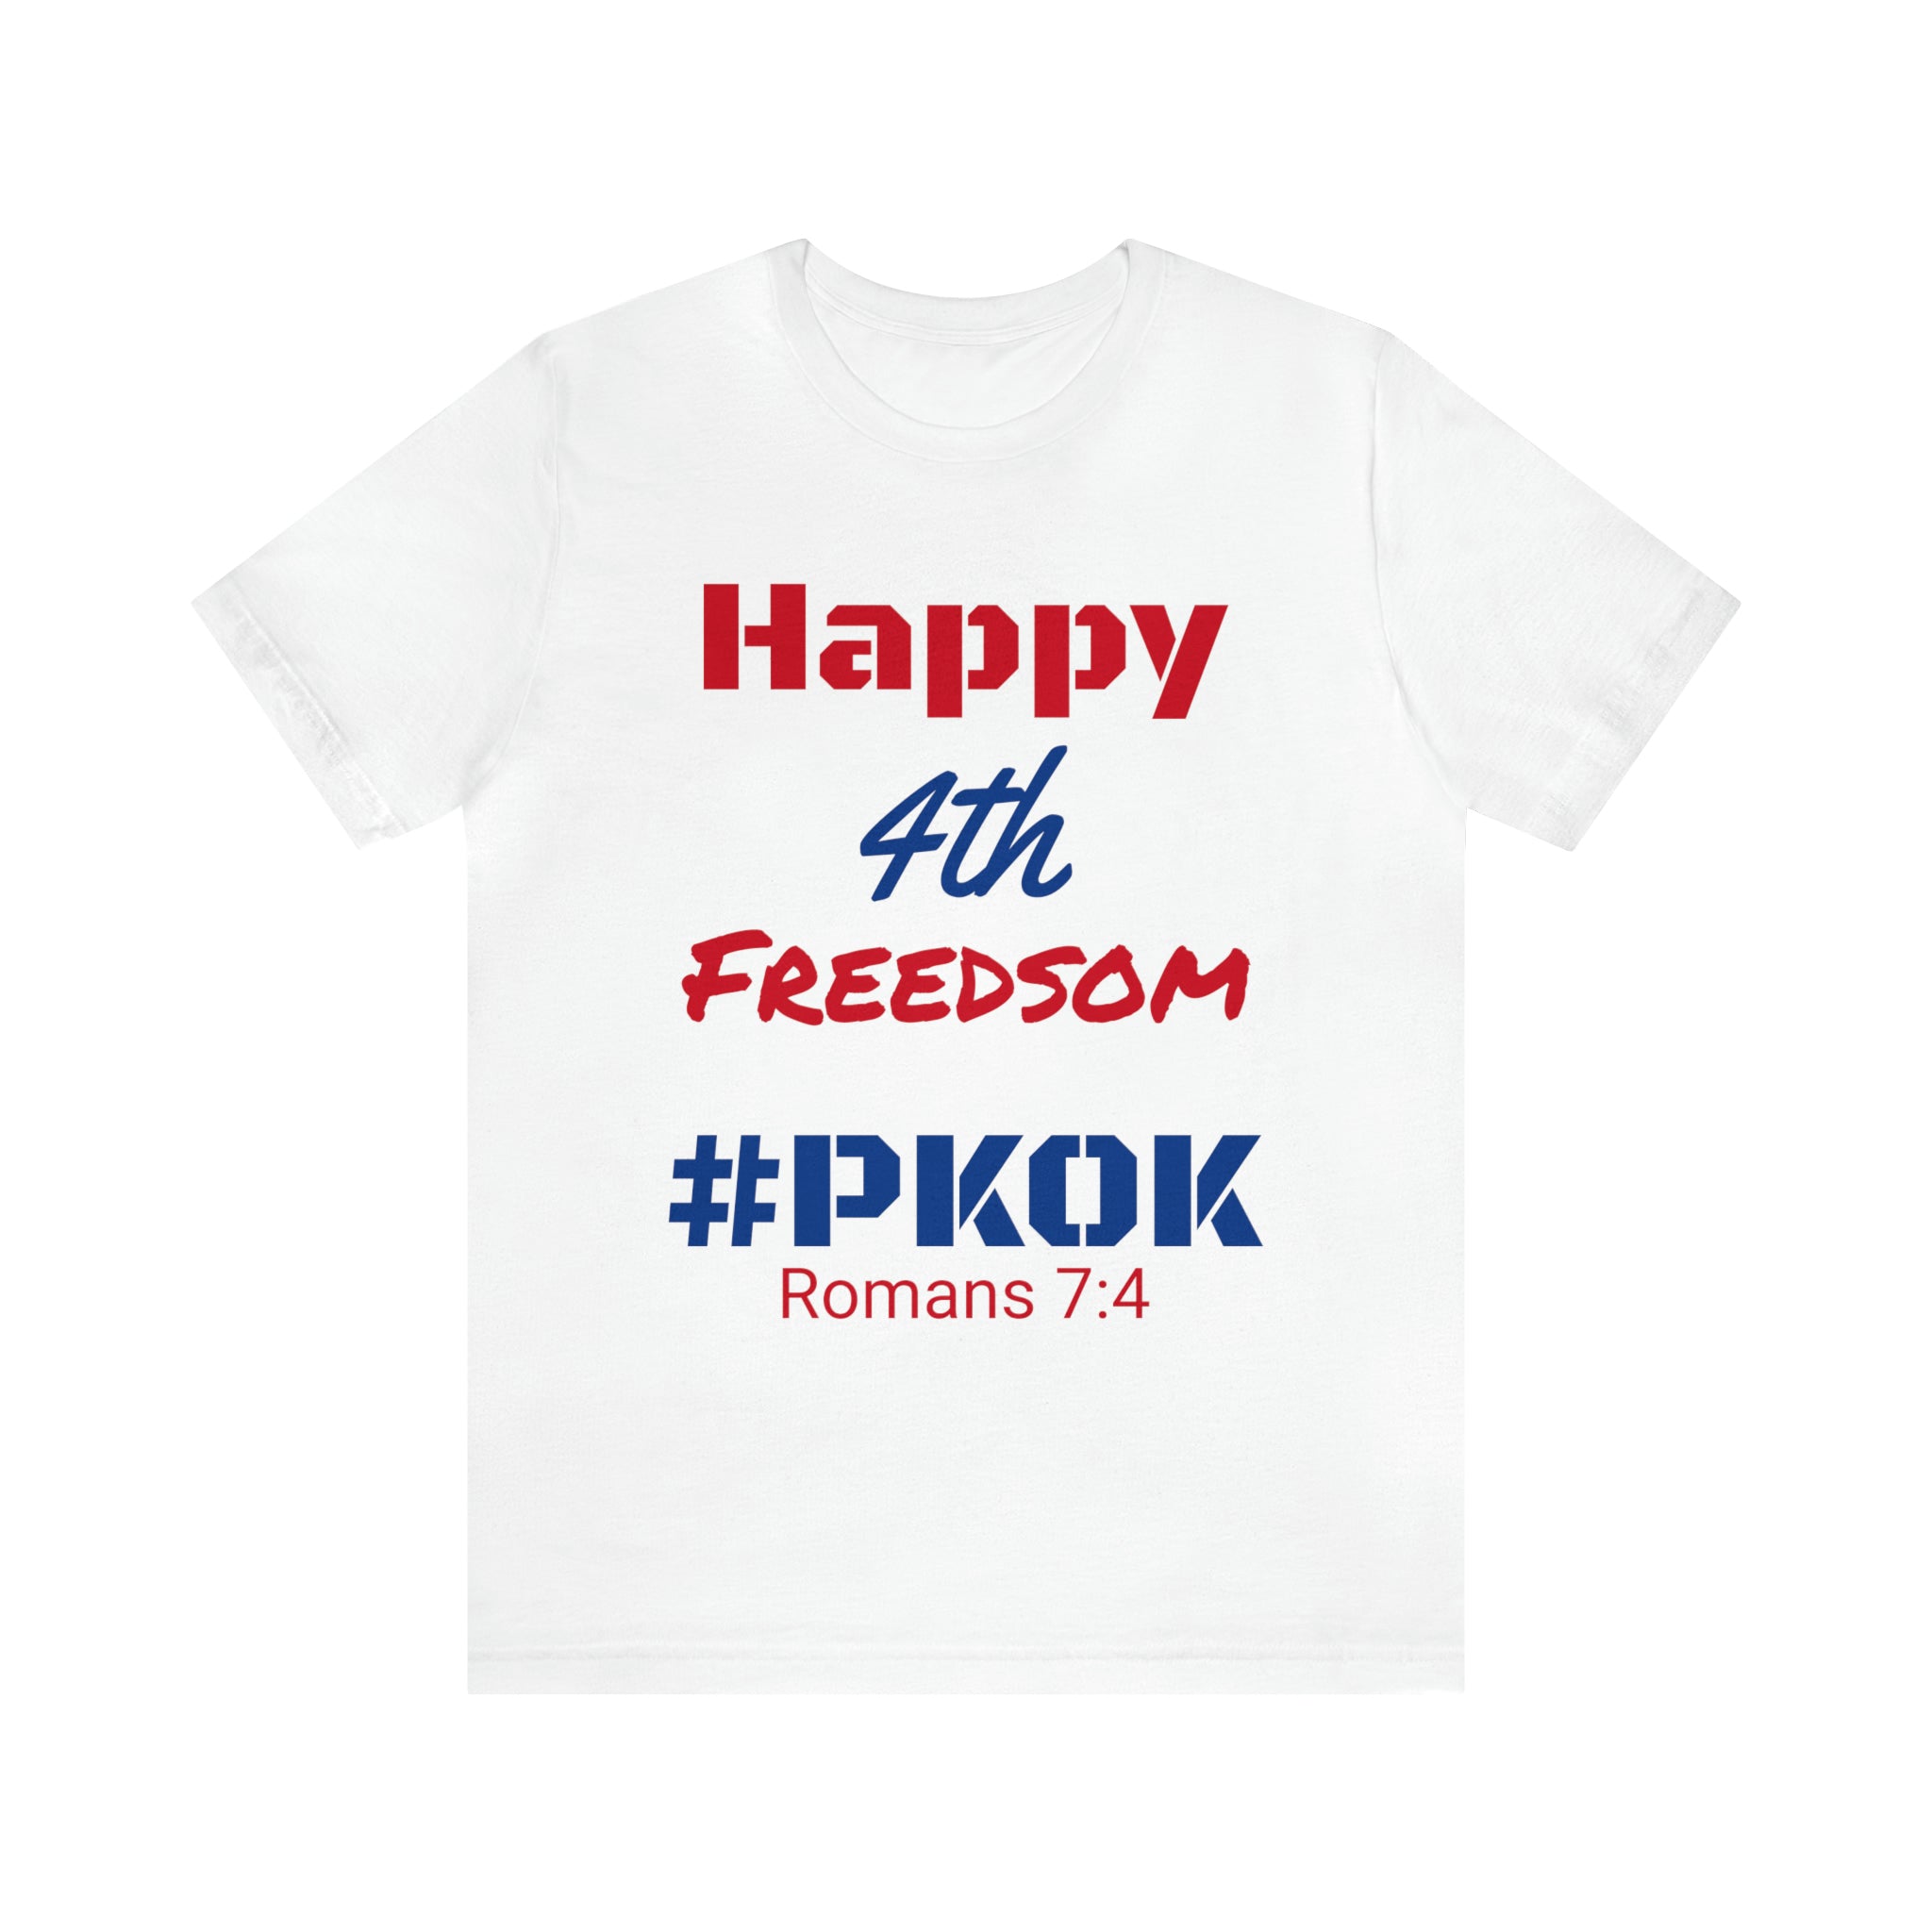 #Freedom 4th  #PKOK #Scripture #July4 #Unisex #Jersey #ShortSleeve #Tee